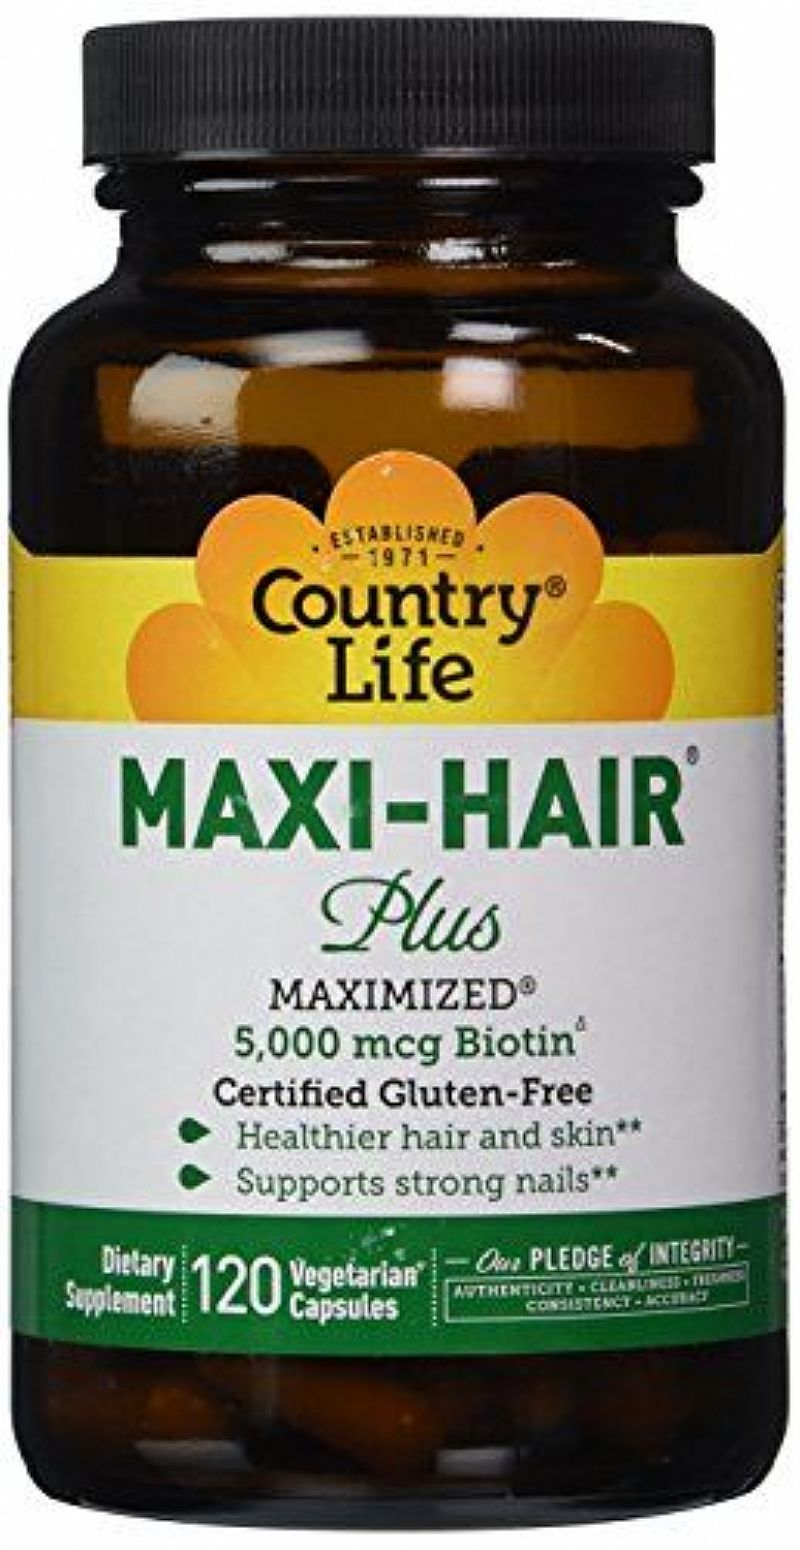 Maxi-hair plus 120 capsulas vegetarianas country life